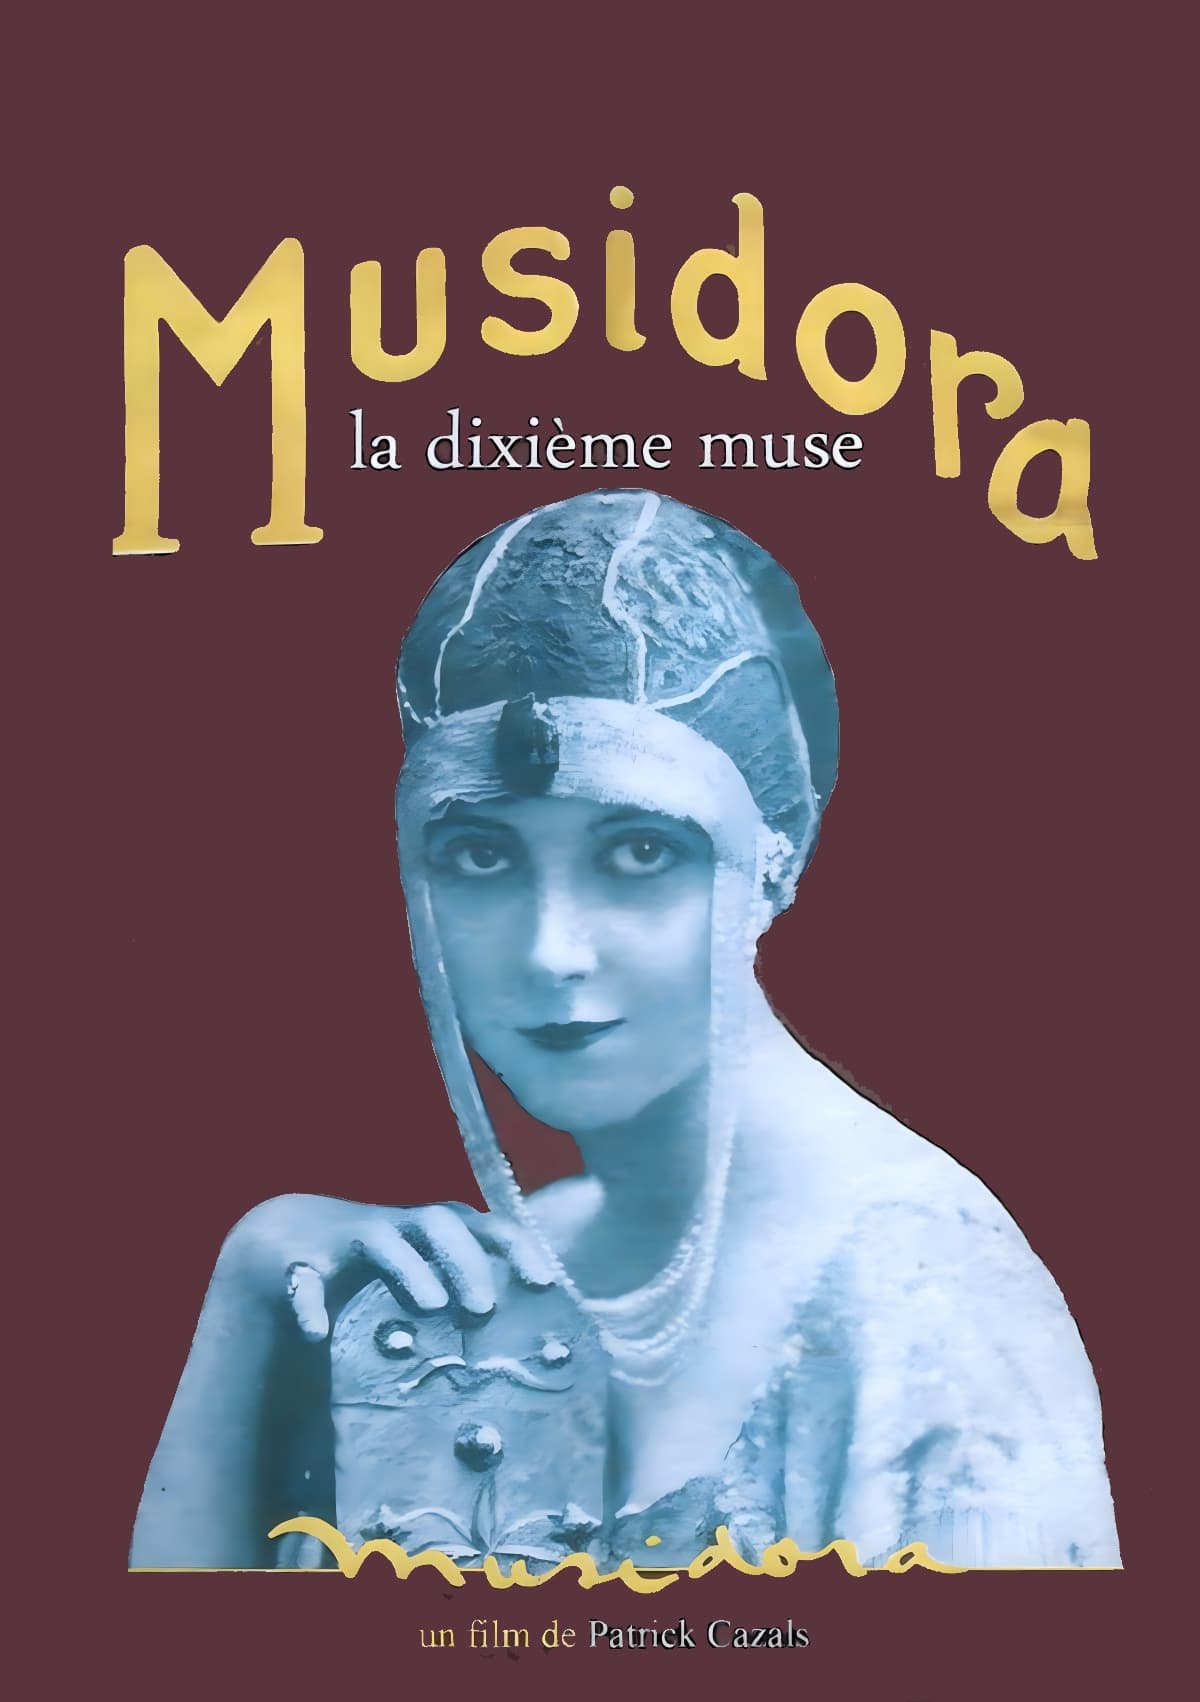 Musidora, the Tenth Muse